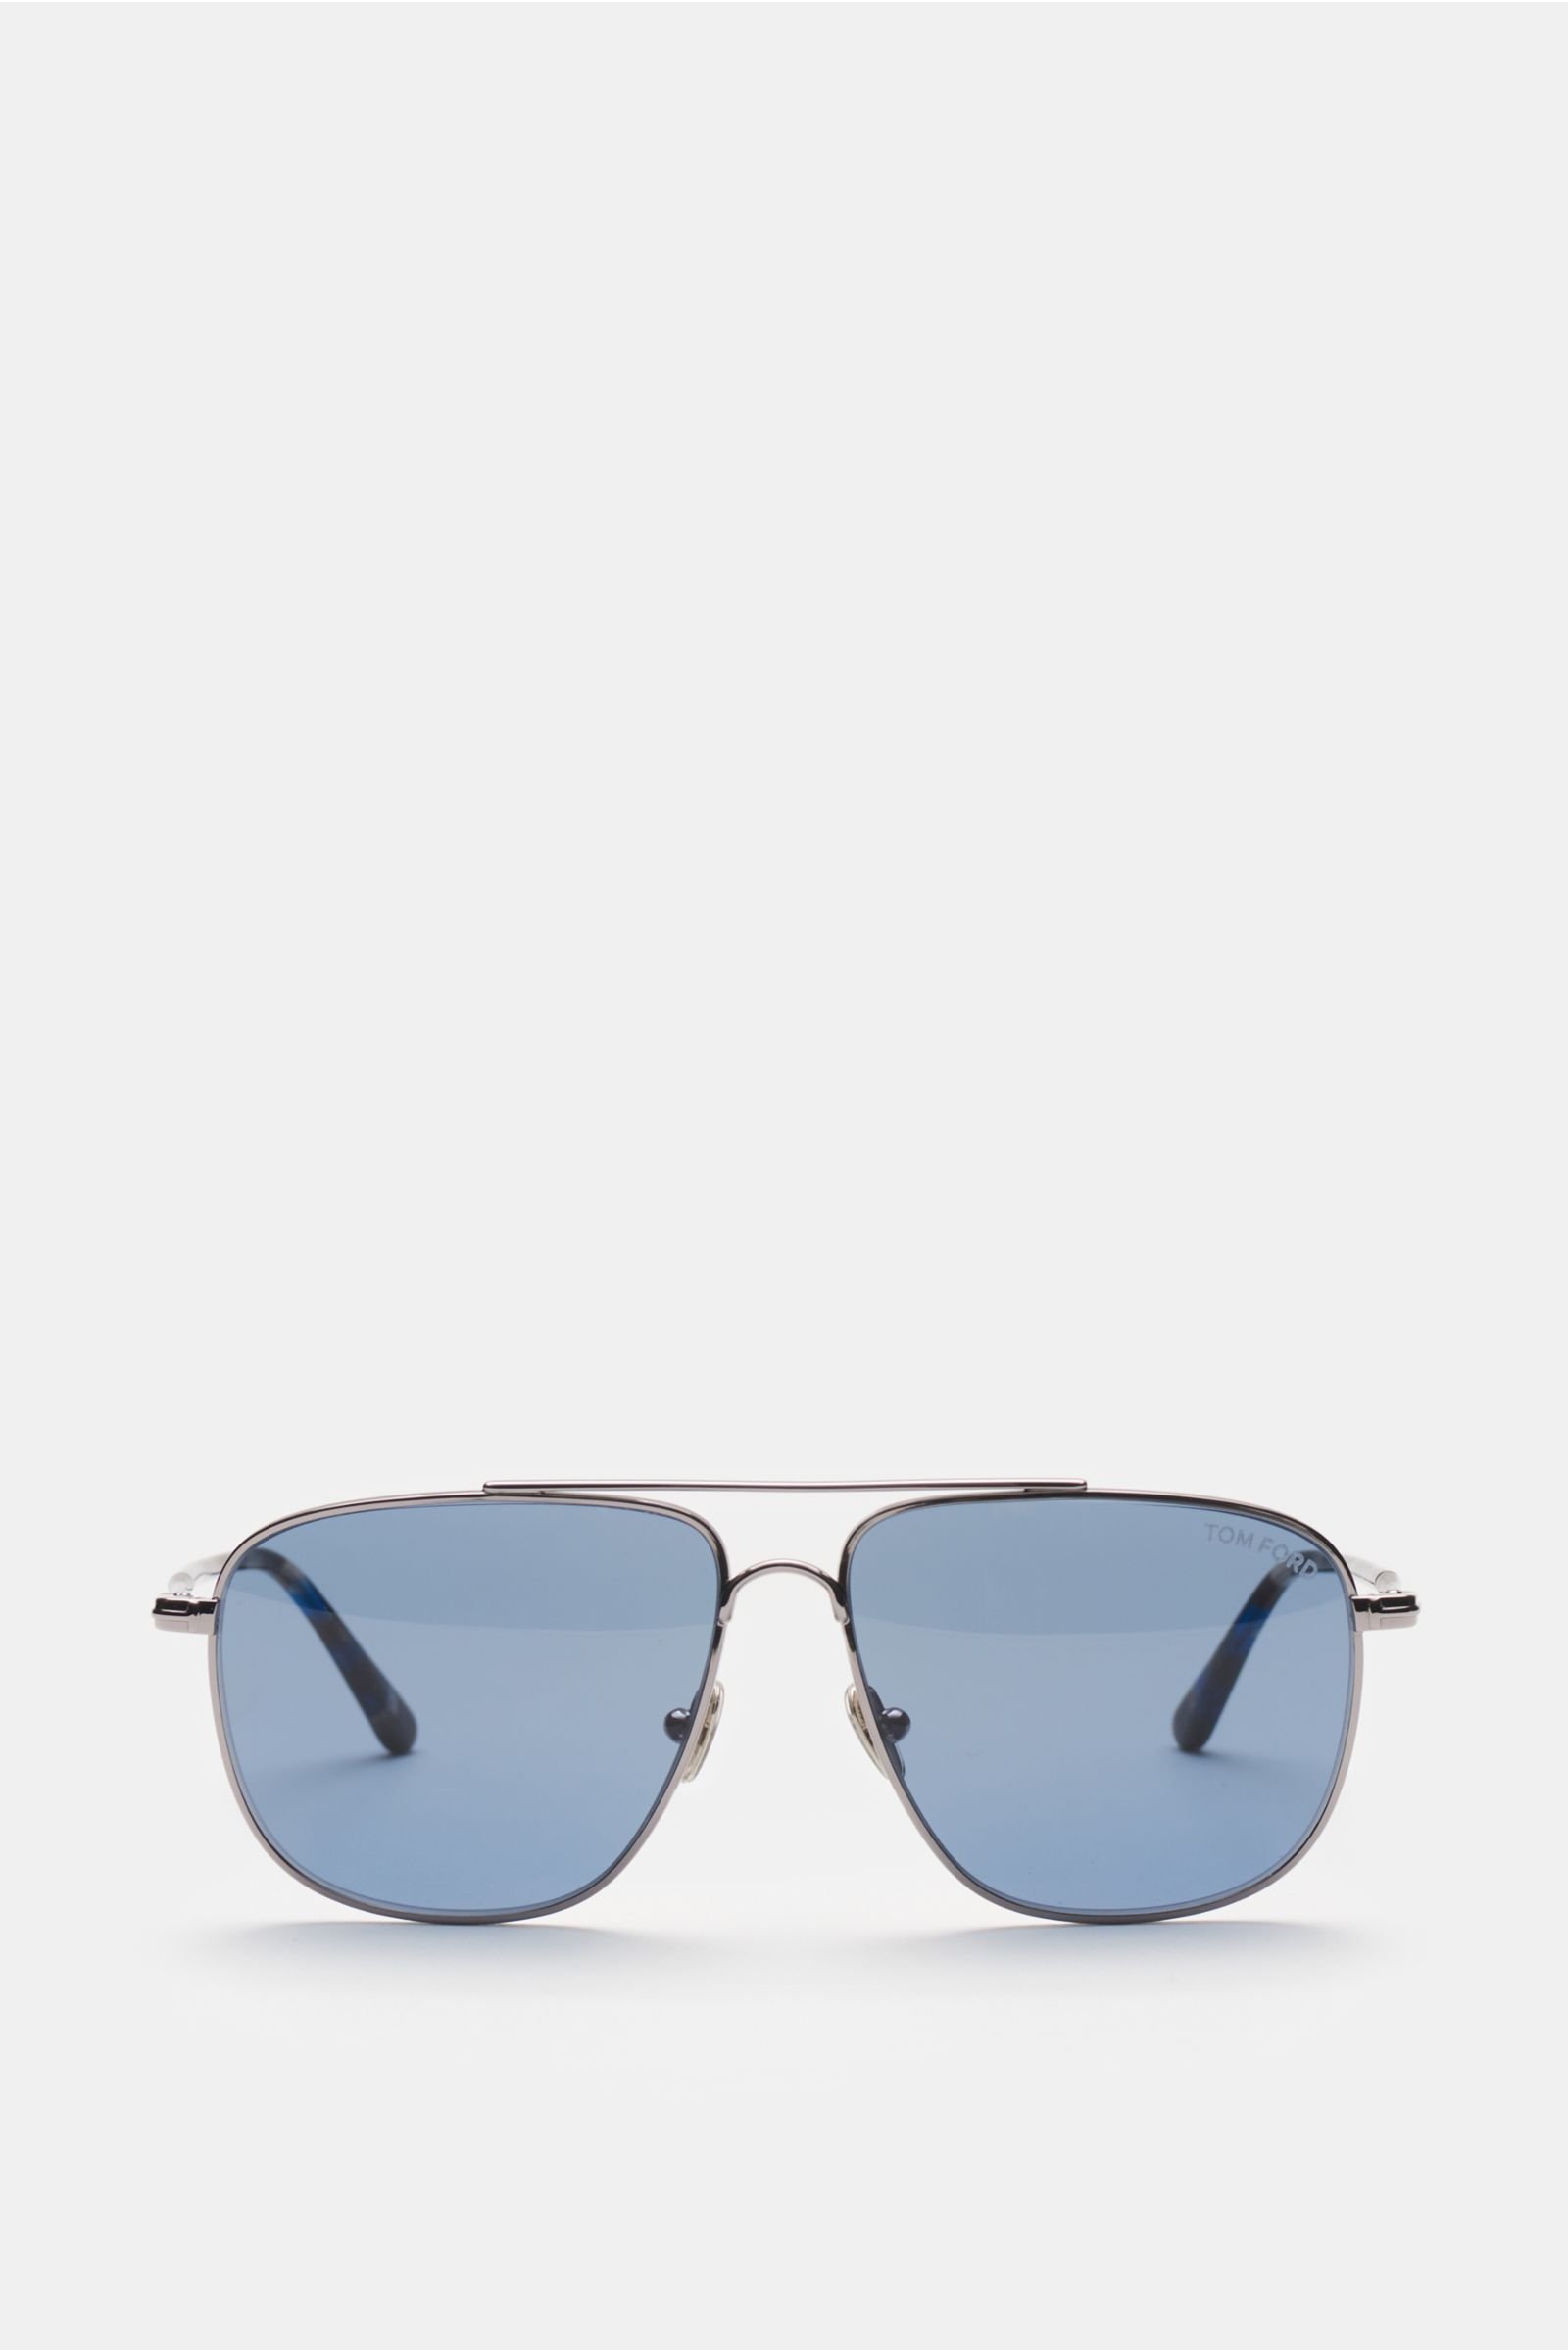 Sunglasses 'Len' silver/brown patterned/blue